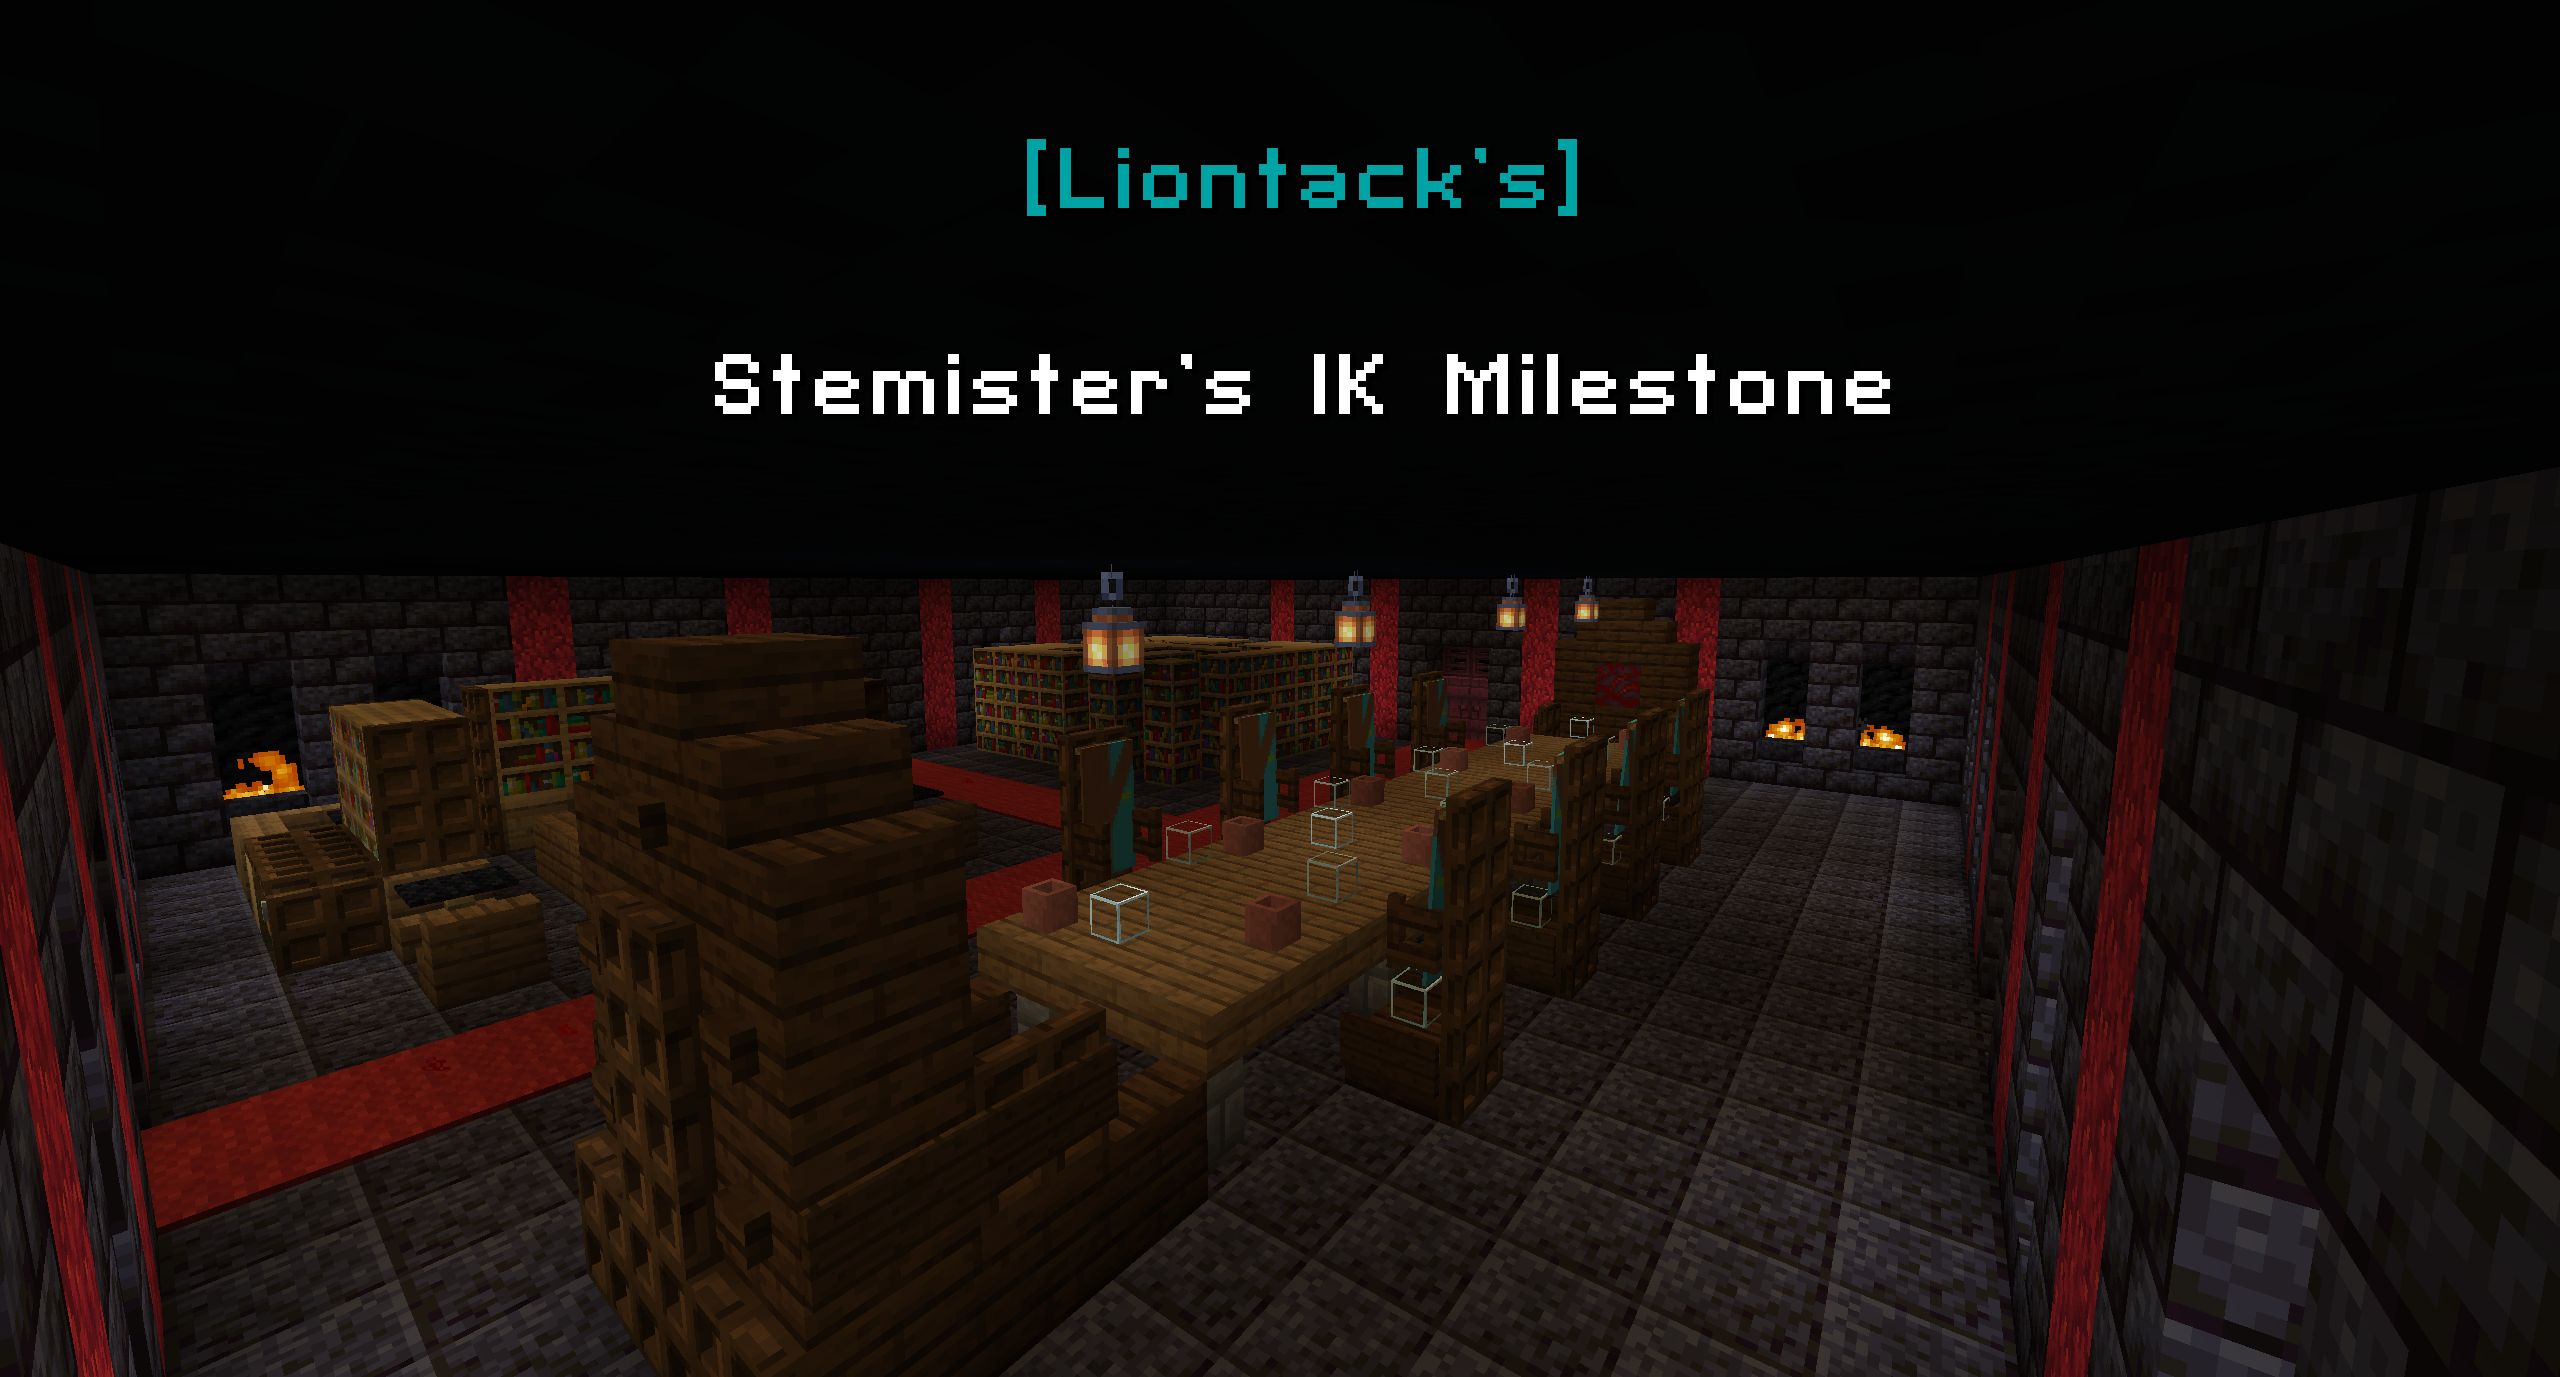 Download [Liontack's] Stemister's 1K Milestone for Minecraft 1.16.5